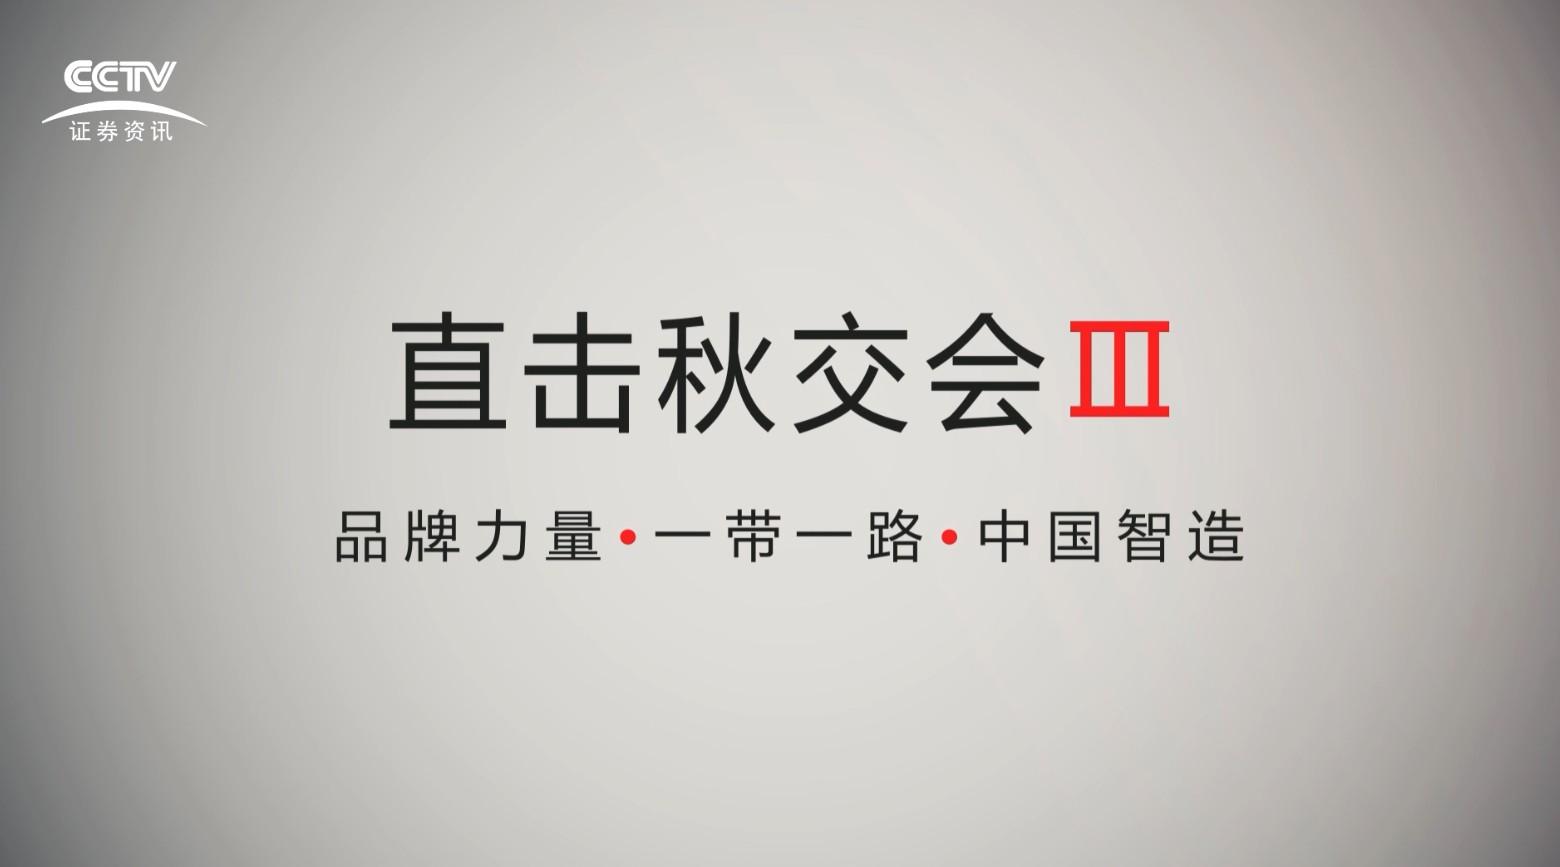 CCTV证券资讯频道《城建与生活》直击秋交会（广交会）III